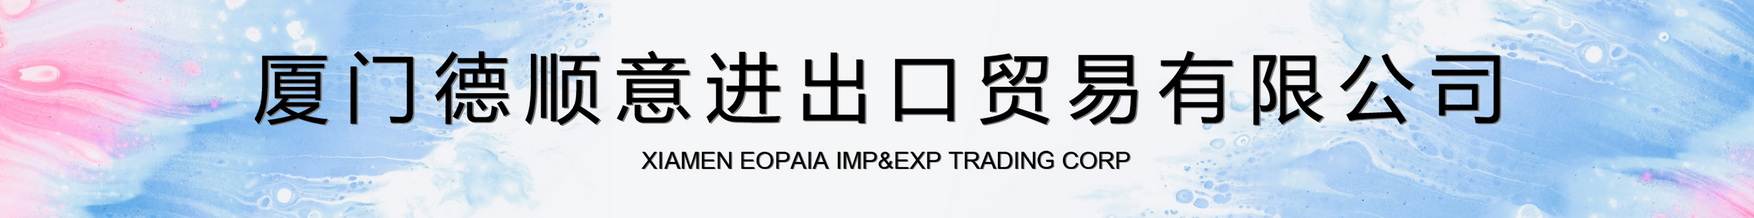 Xiamen Eopaia Imp & Exps Trading Corp